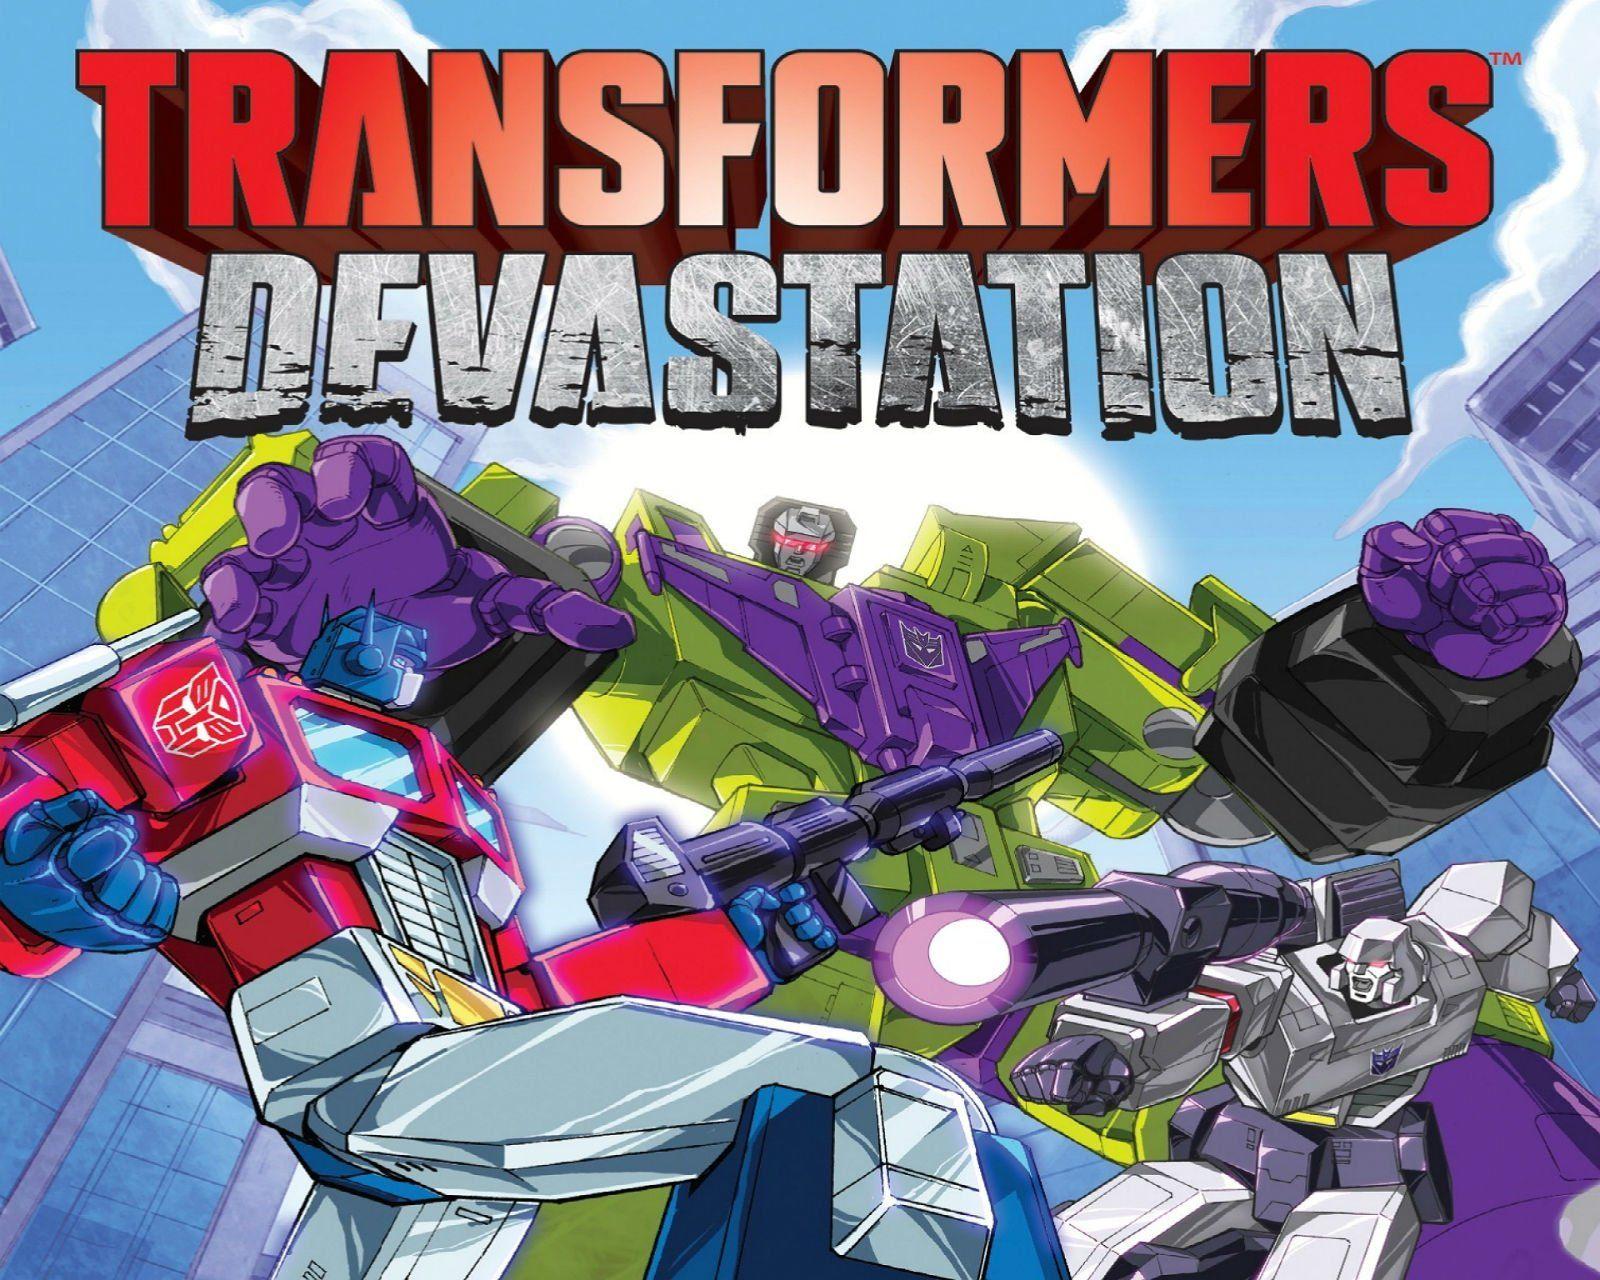 Transformers music. Transformers: Devastation. 2015 — Transformers: Devastation. Трансформеры опустошение. Игра Transformers Devastation.